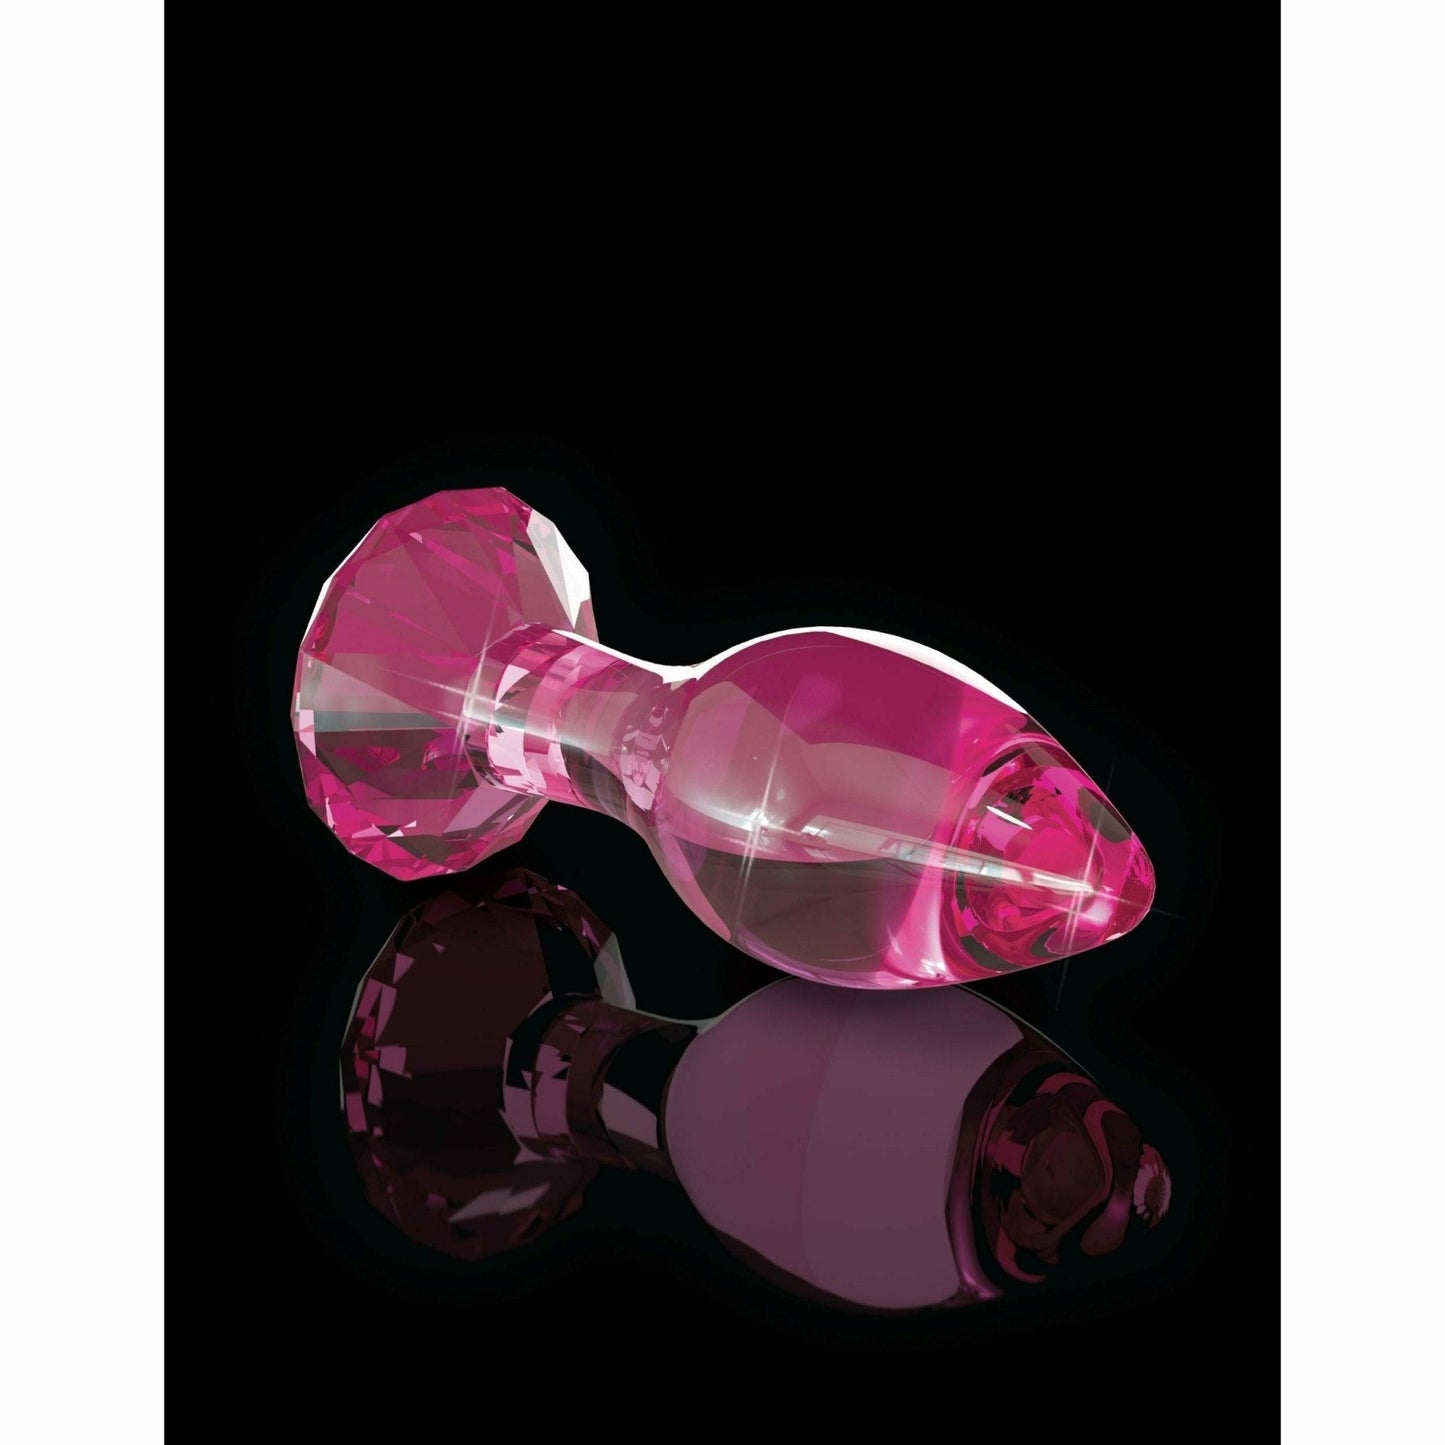 Icicles No 79 Pink Jewel Glass Butt Plug